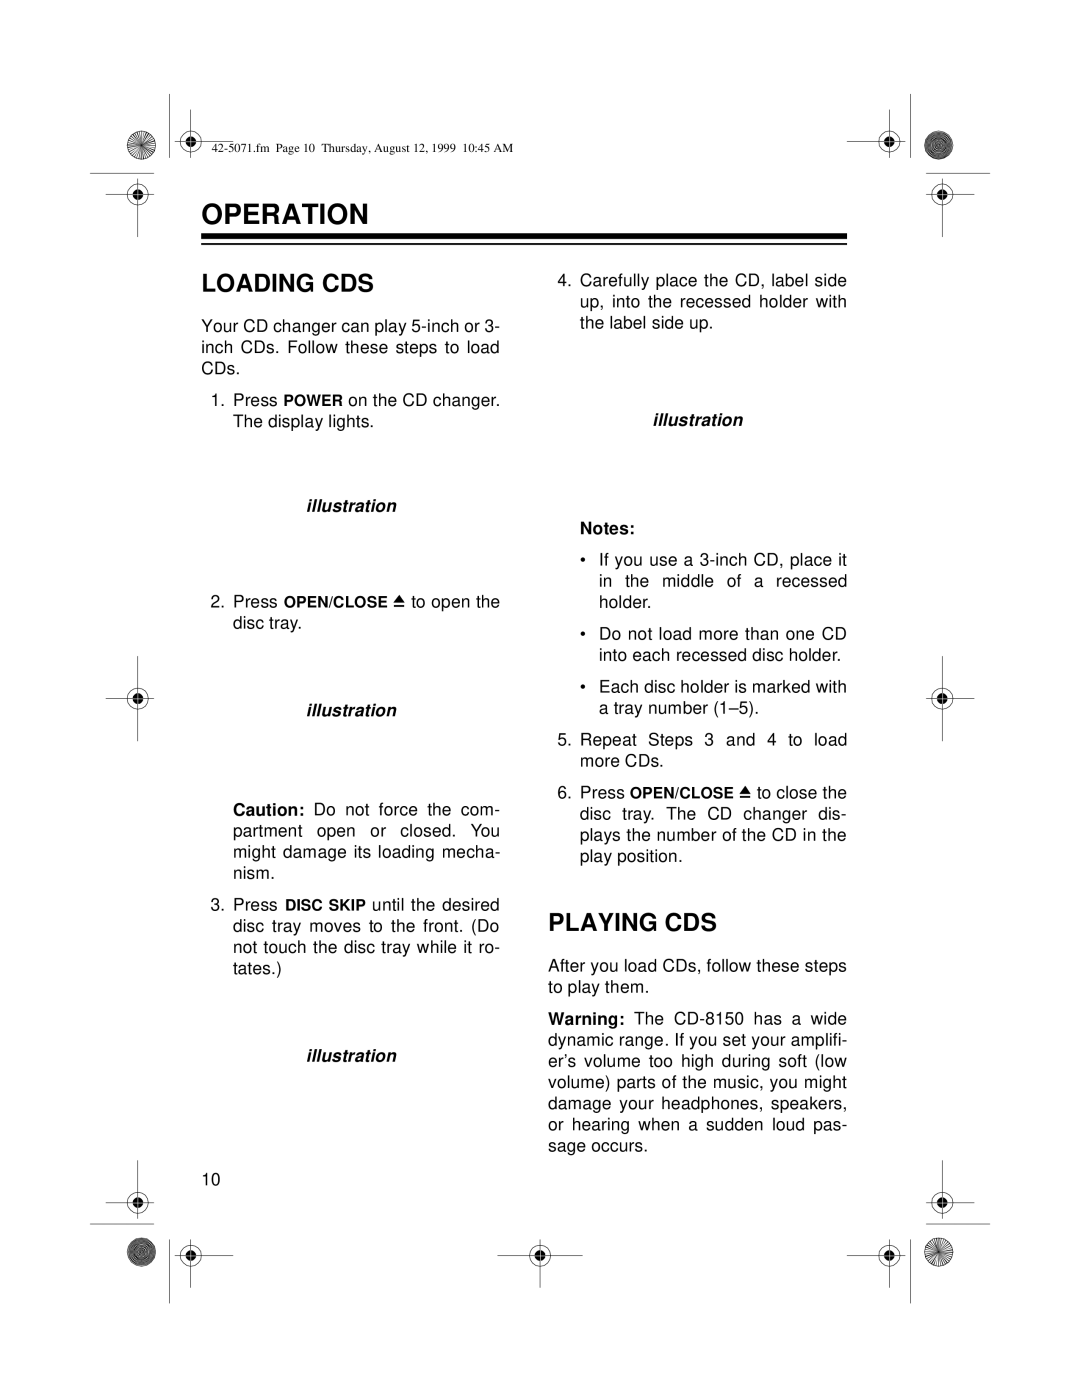 Radio Shack CD-8150 owner manual Operation, Loading Cds, Playing Cds, illustration 